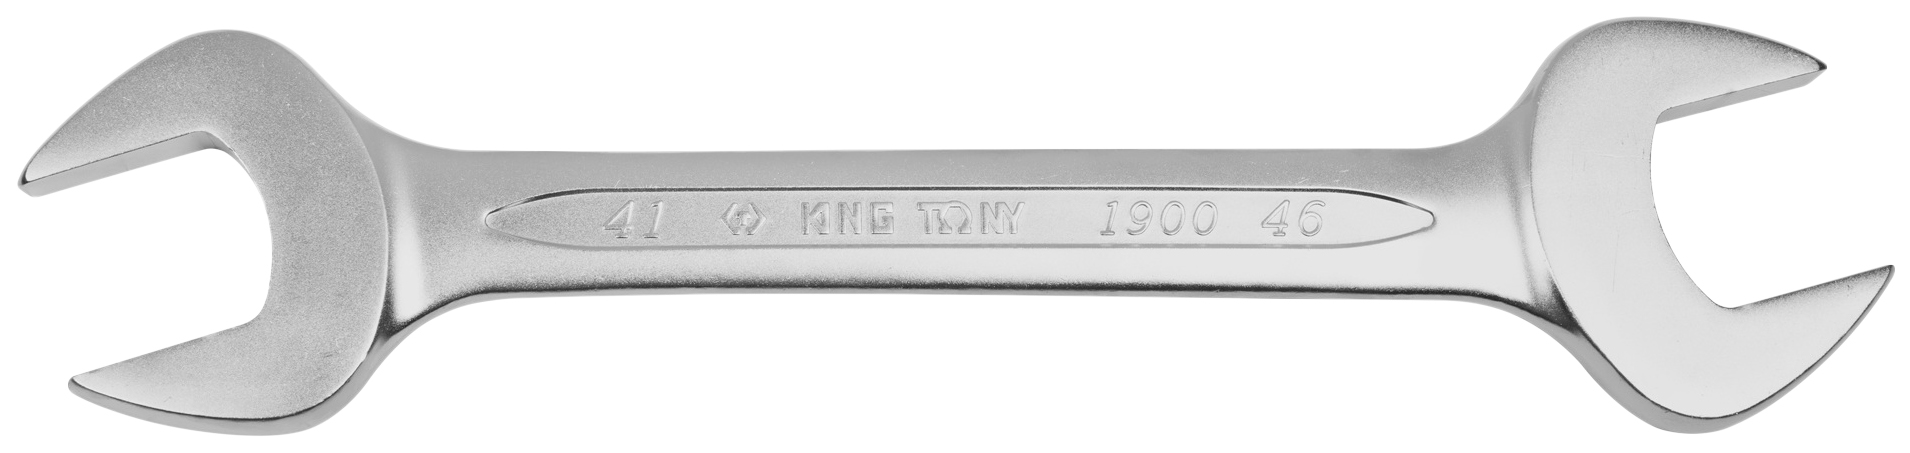 Рожковый ключ KING TONY 19004146 king tony ключ рожковый диэлектрический 22 мм king tony 10f0ve 22